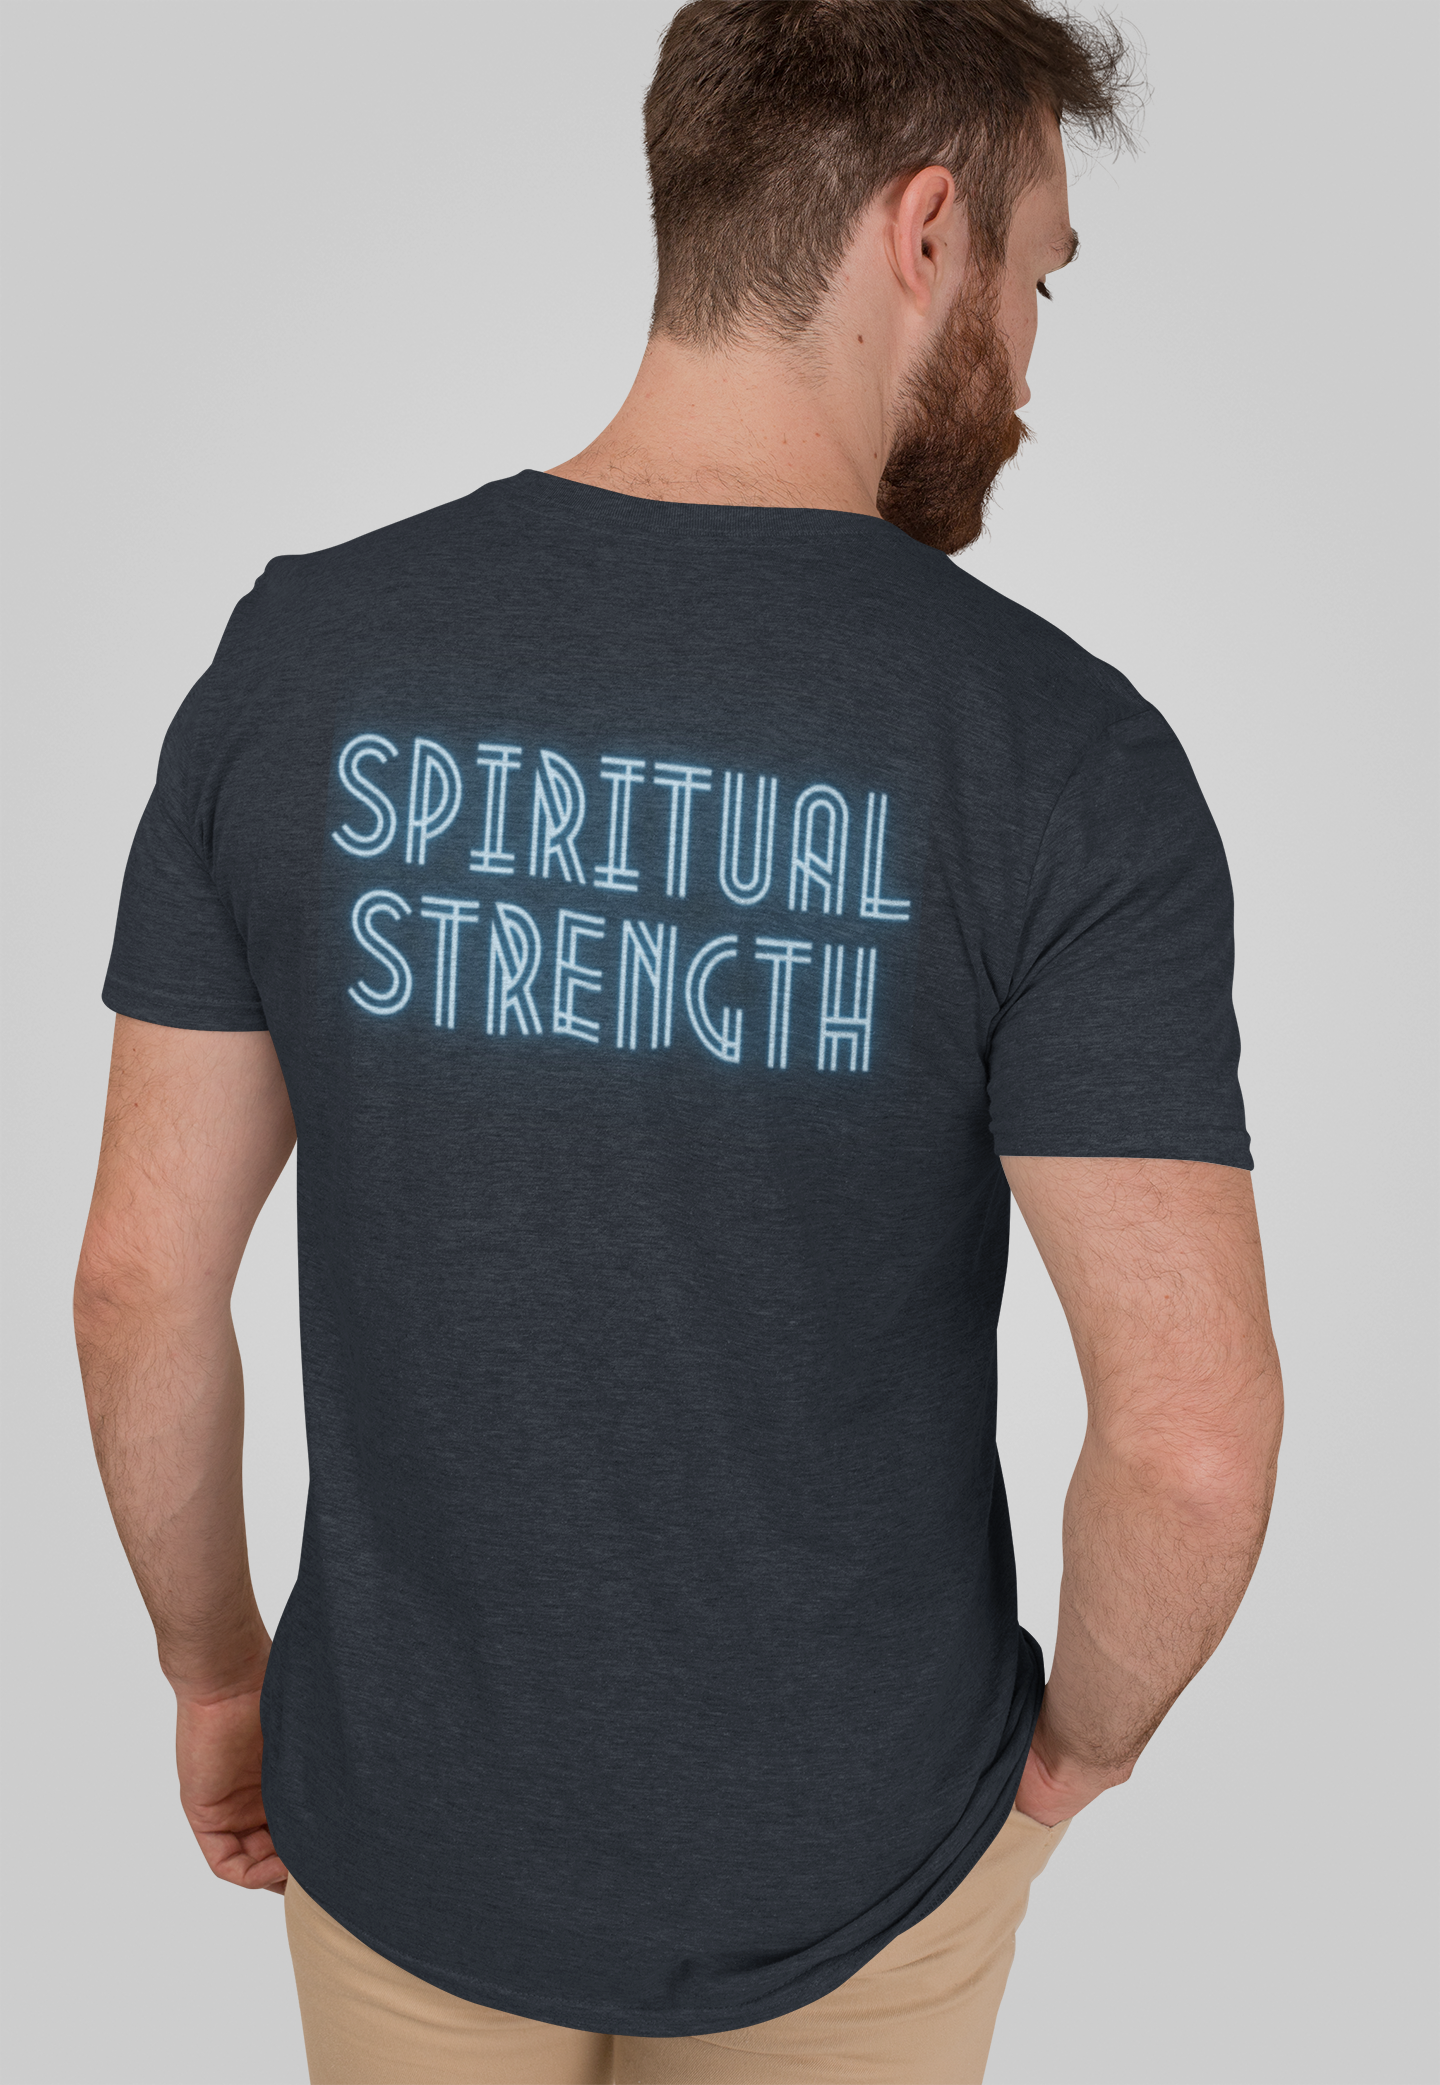 Spiritual Strength